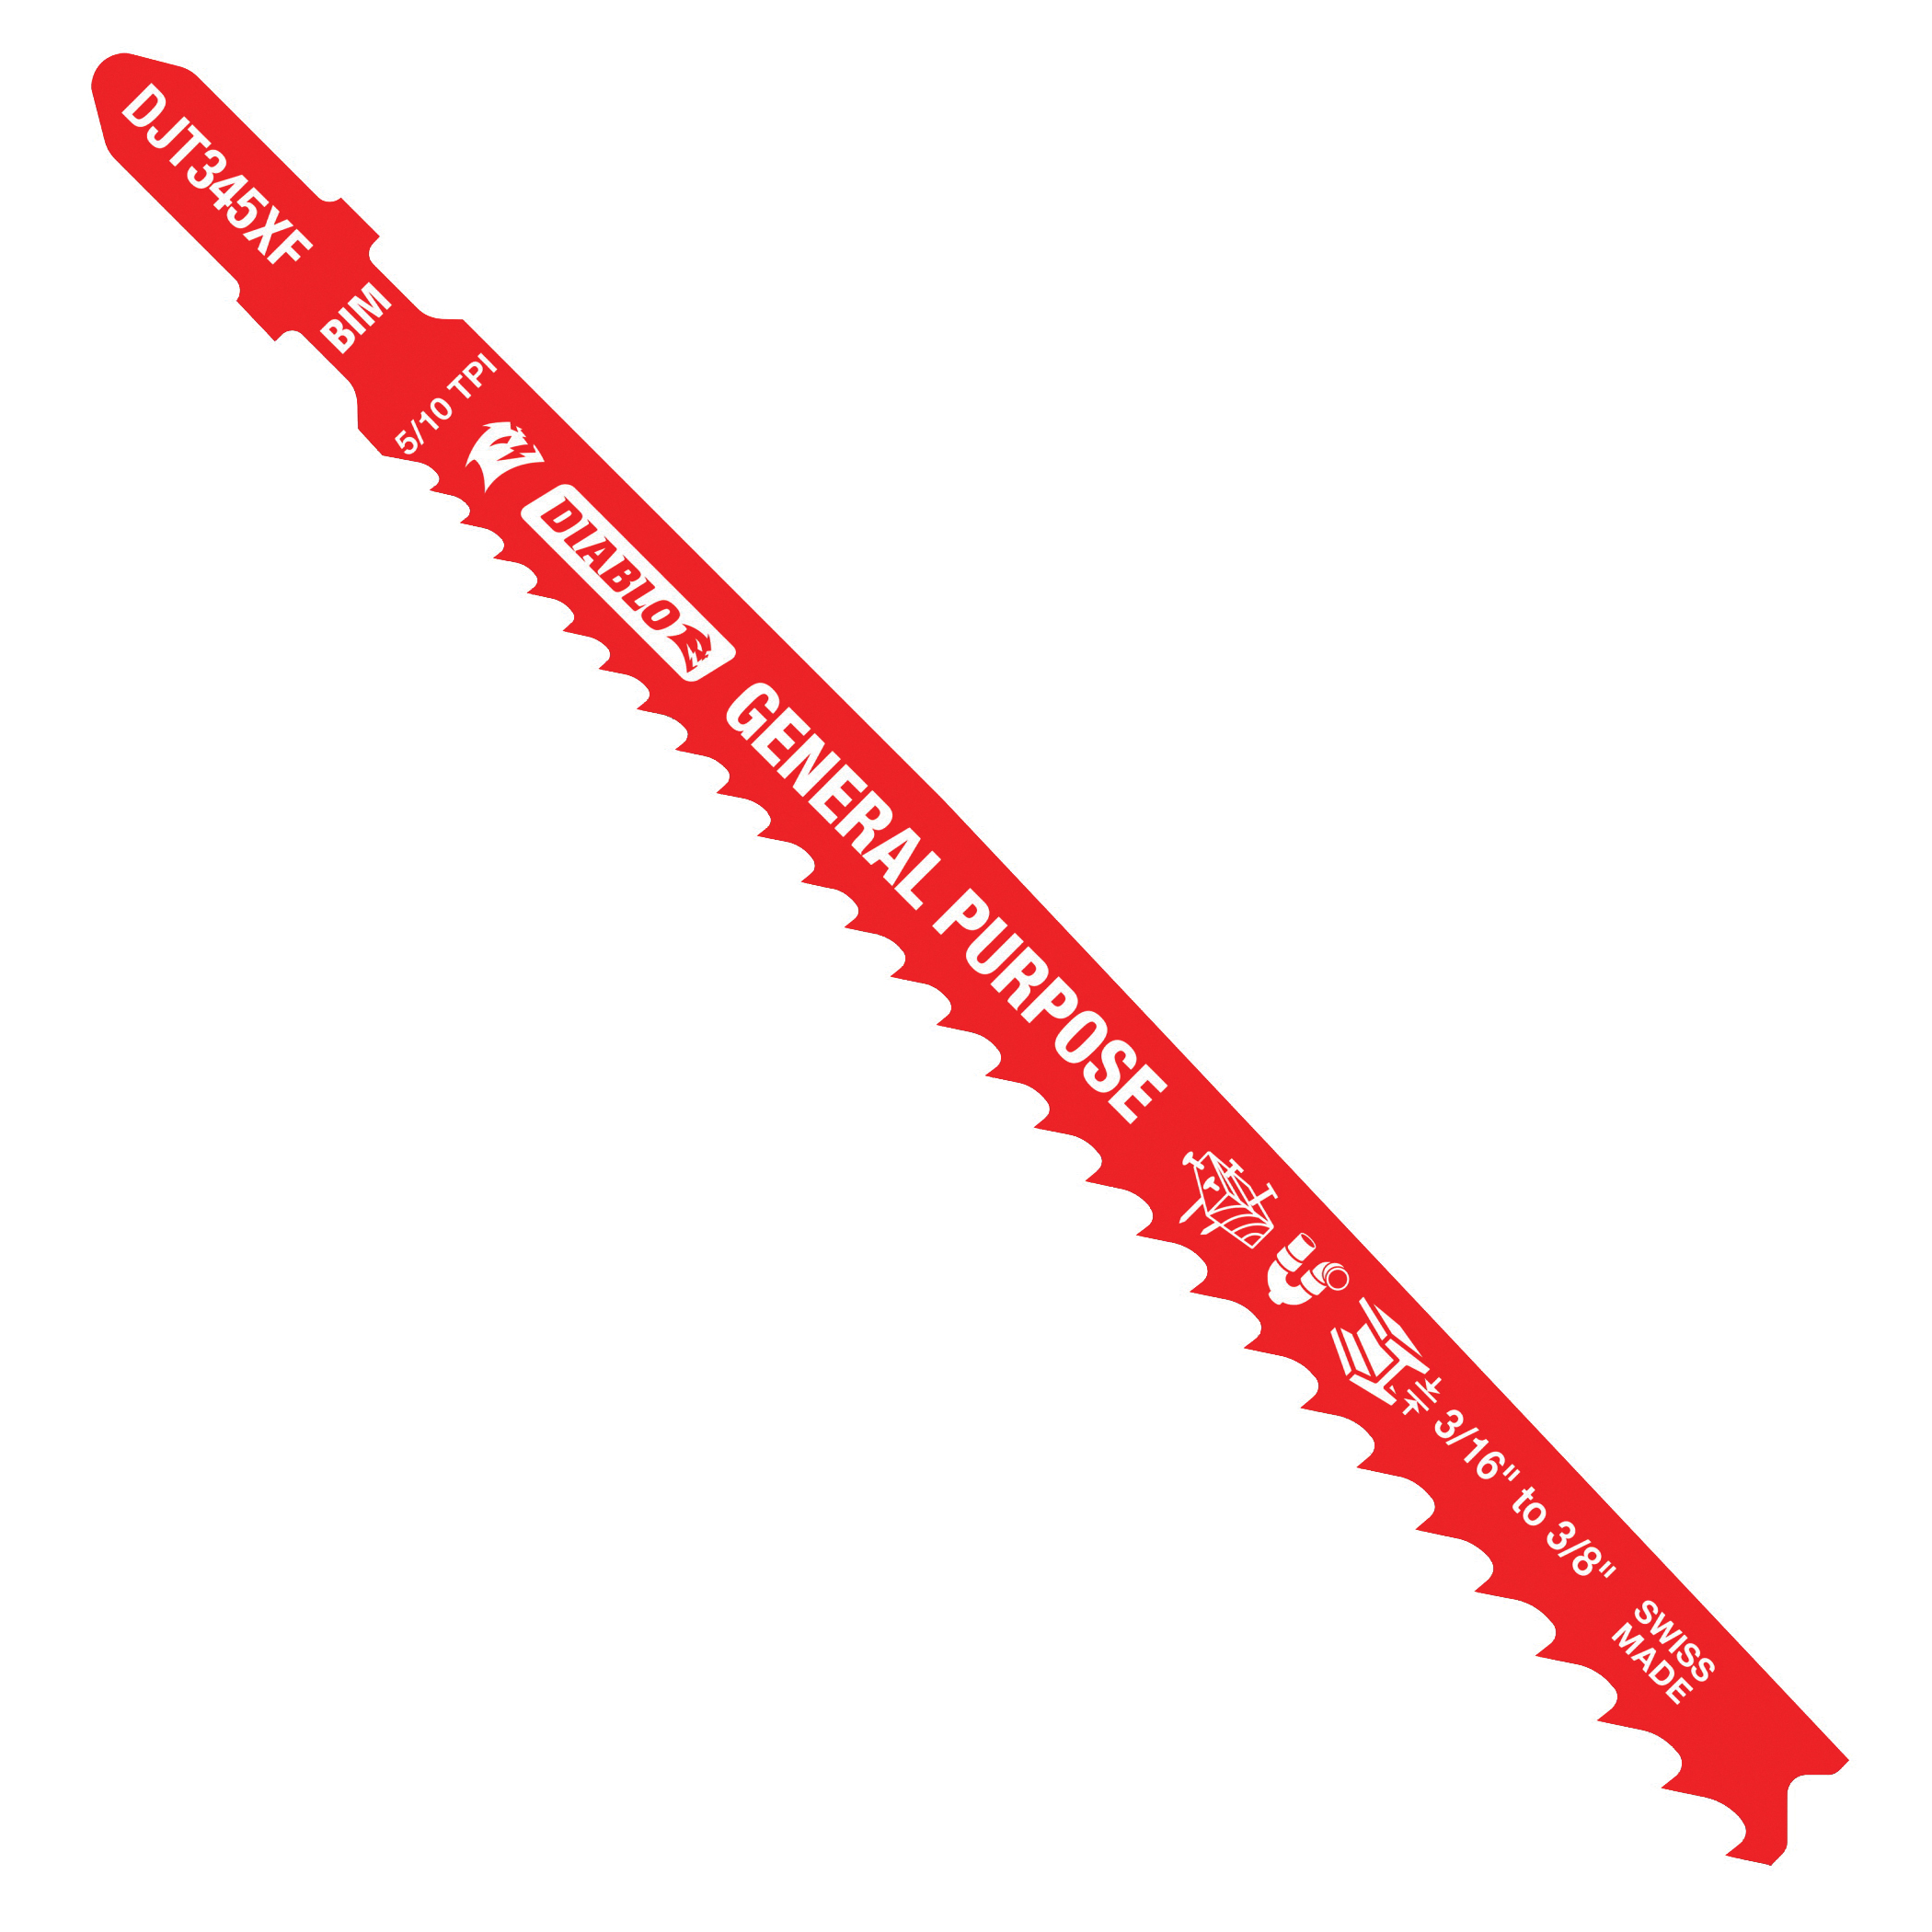 DJT345XF5 Jig Saw Blade, 5-1/4 in L, 5/10 TPI, Bi-Metal Cutting Edge